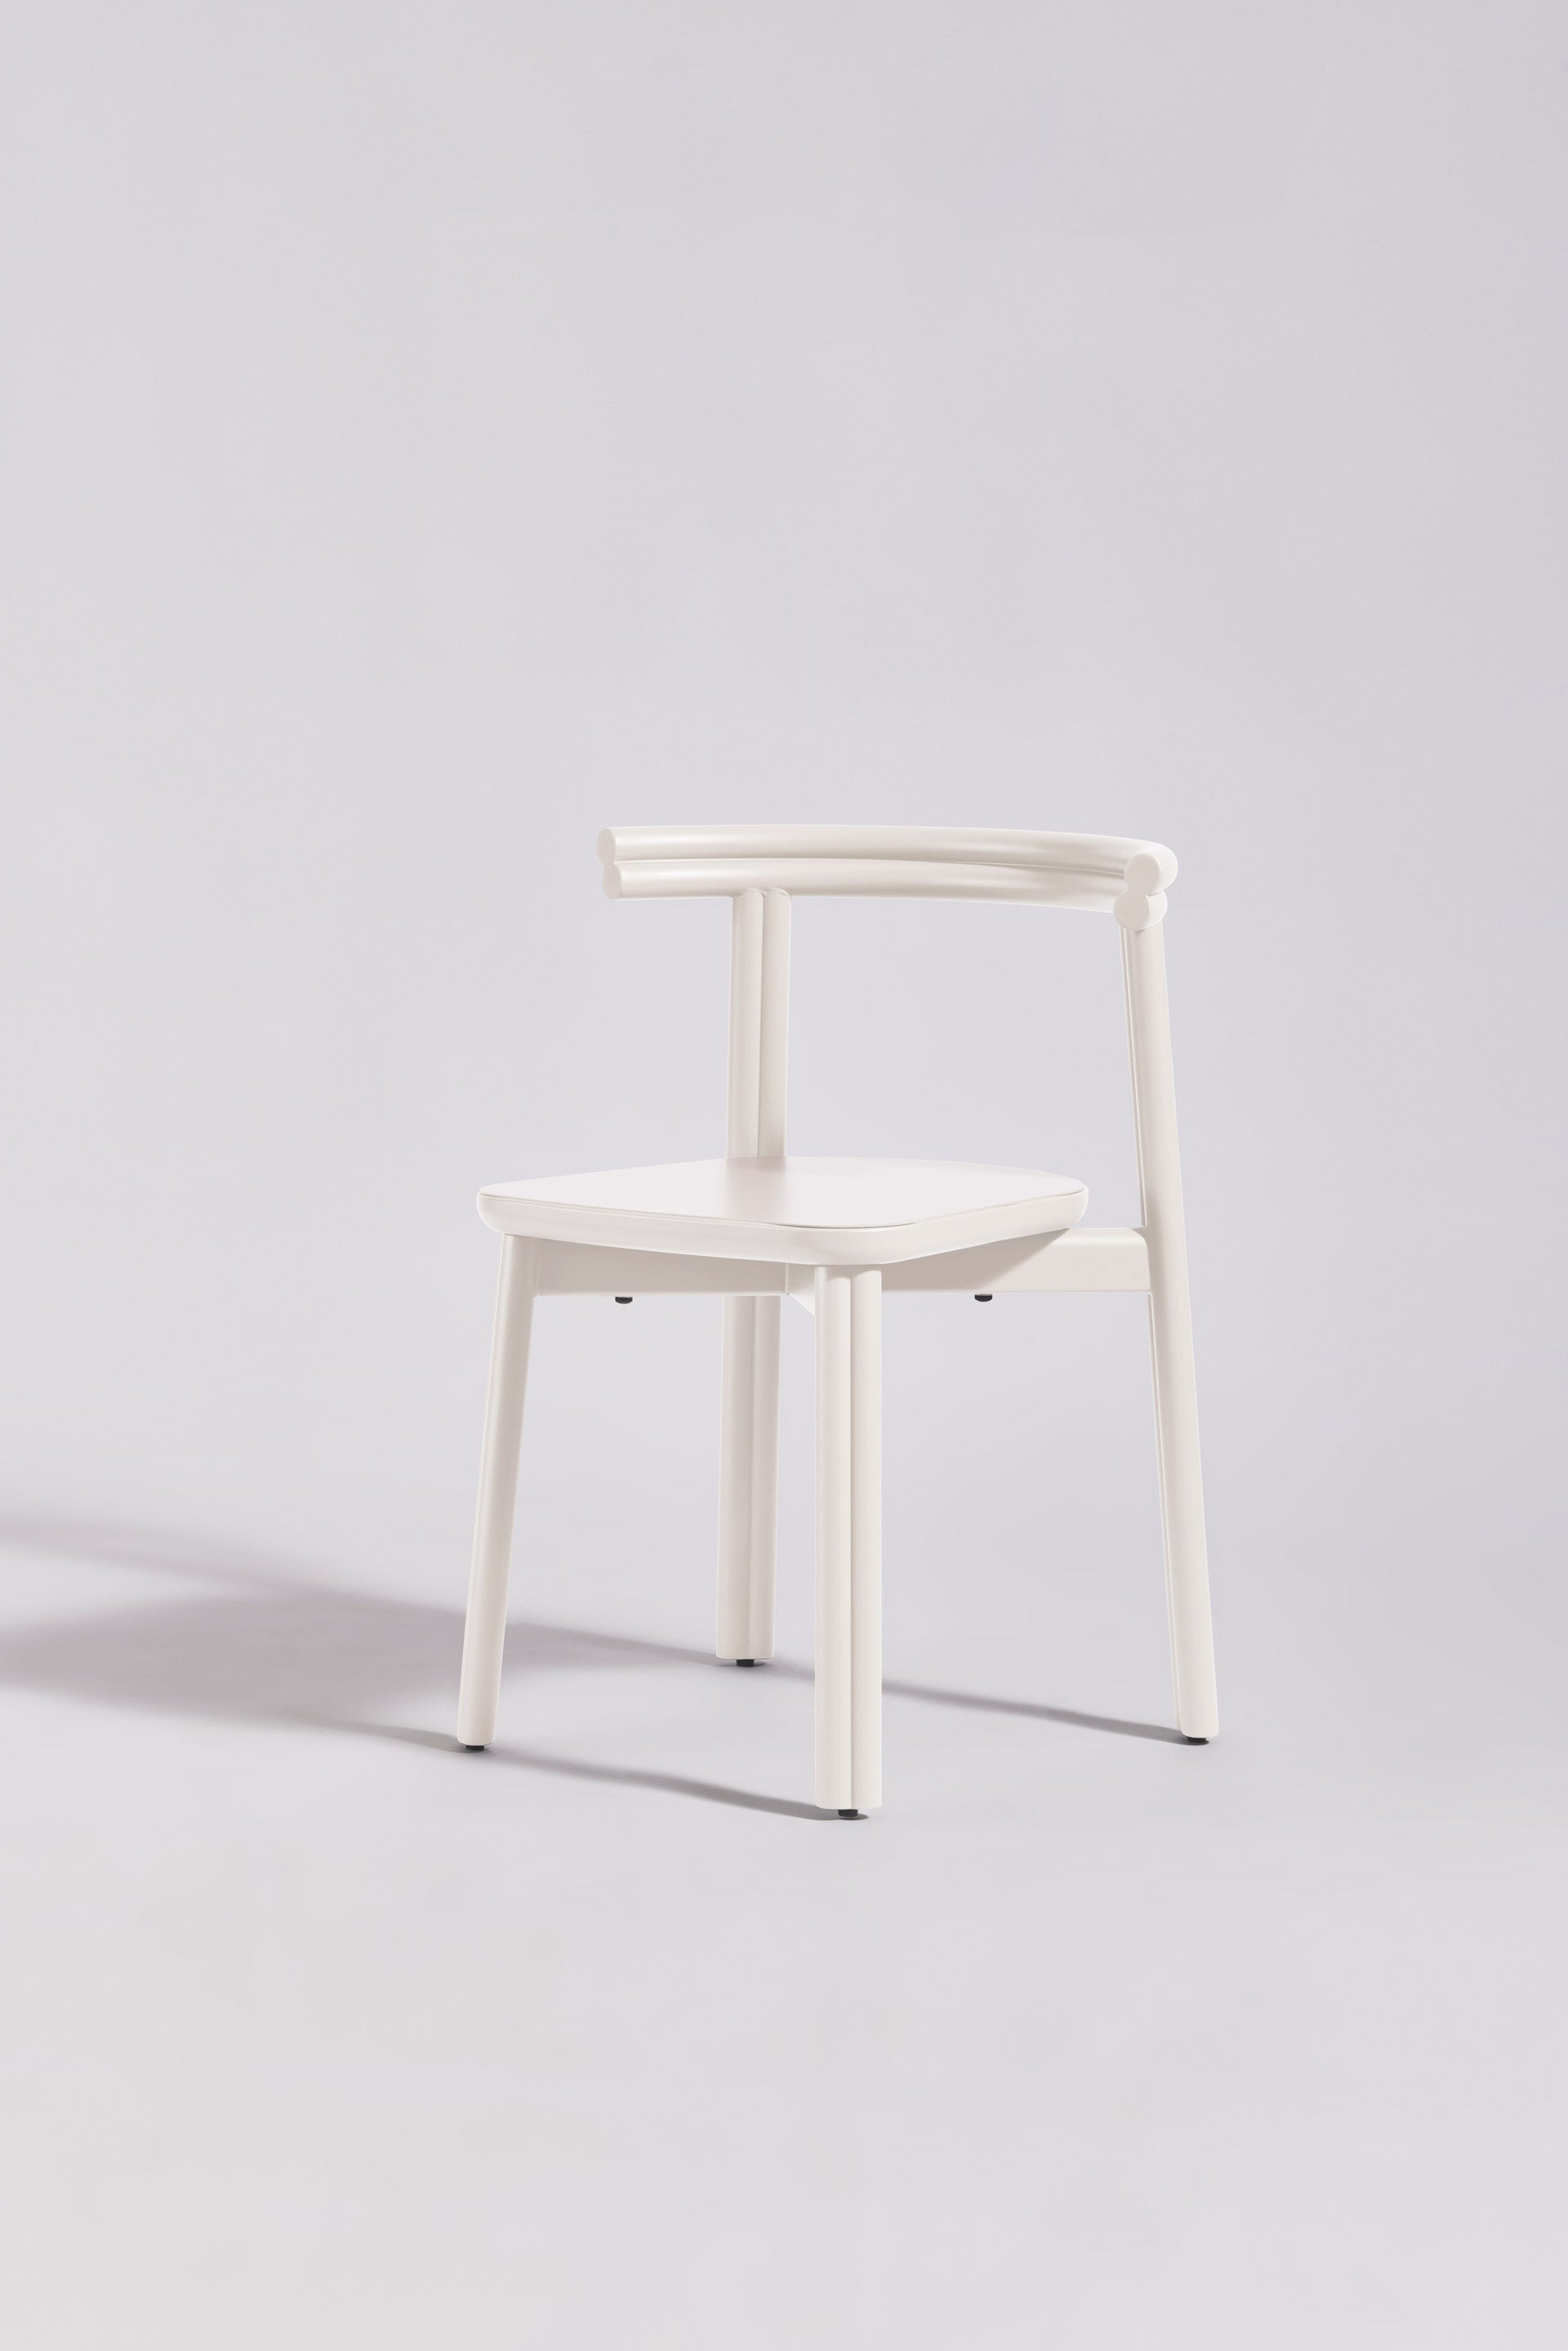 Twill Metal Chair | Soft White Metal Dining Chair | GibsonKarlo | DesignByThem